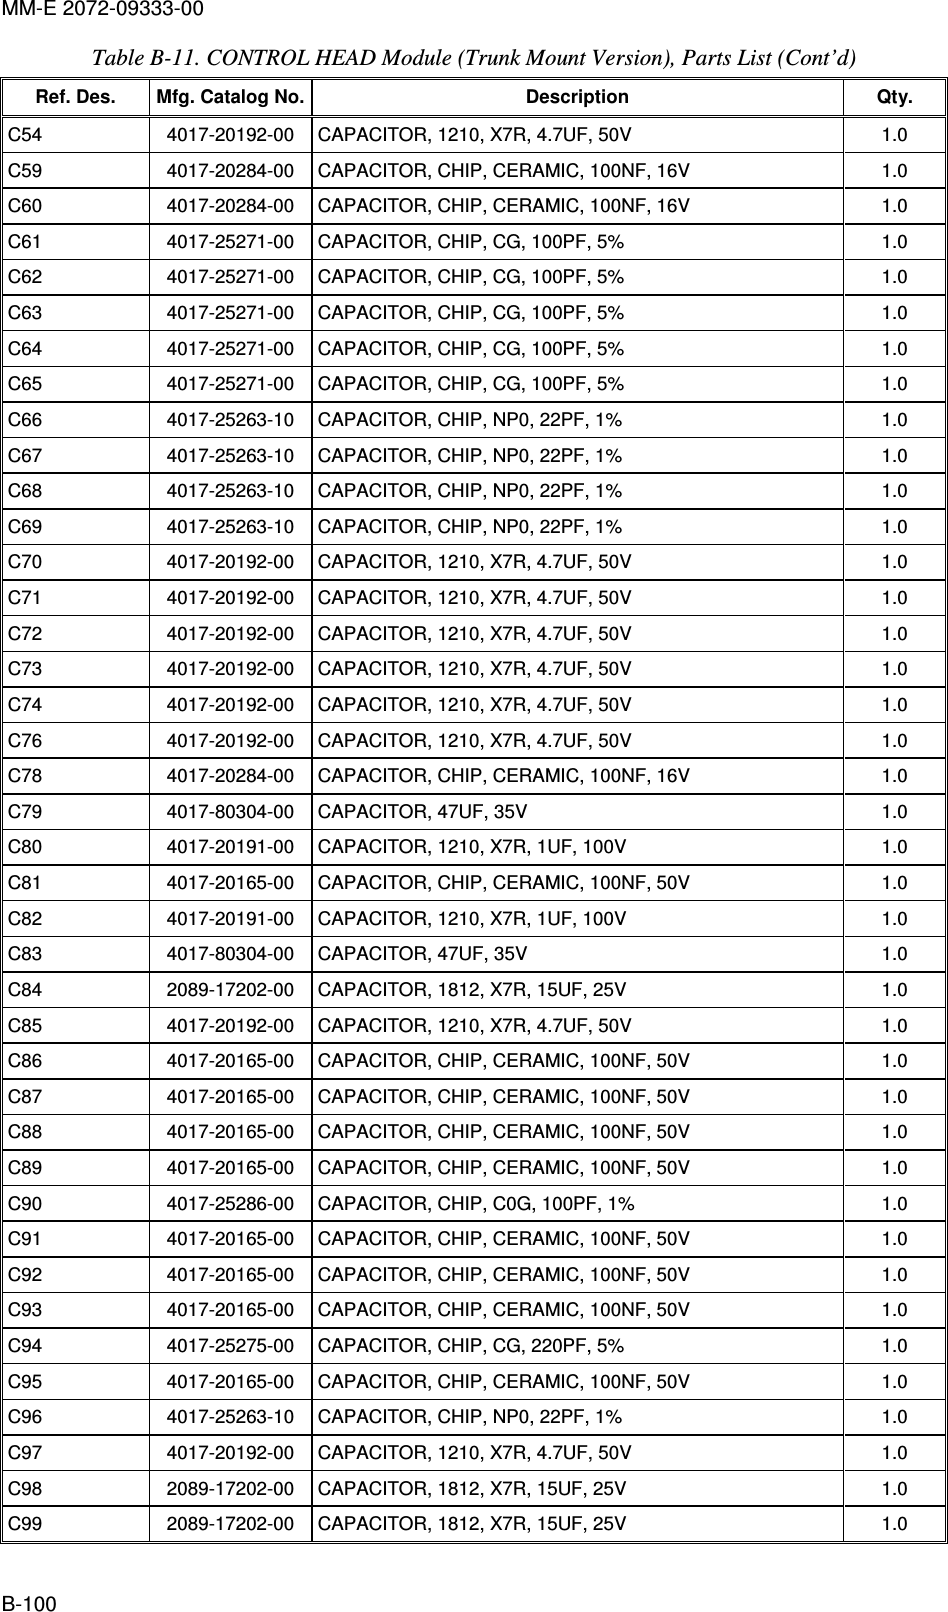 MM-E 2072-09333-00 B-100 Table  B-11. CONTROL HEAD Module (Trunk Mount Version), Parts List (Cont’d)  Ref. Des.  Mfg. Catalog No. Description  Qty. C54   4017-20192-00   CAPACITOR, 1210, X7R, 4.7UF, 50V  1.0  C59   4017-20284-00   CAPACITOR, CHIP, CERAMIC, 100NF, 16V  1.0  C60   4017-20284-00   CAPACITOR, CHIP, CERAMIC, 100NF, 16V  1.0  C61   4017-25271-00   CAPACITOR, CHIP, CG, 100PF, 5%  1.0  C62   4017-25271-00   CAPACITOR, CHIP, CG, 100PF, 5%  1.0  C63   4017-25271-00   CAPACITOR, CHIP, CG, 100PF, 5%  1.0  C64   4017-25271-00   CAPACITOR, CHIP, CG, 100PF, 5%  1.0  C65   4017-25271-00   CAPACITOR, CHIP, CG, 100PF, 5%  1.0  C66   4017-25263-10   CAPACITOR, CHIP, NP0, 22PF, 1%  1.0  C67   4017-25263-10   CAPACITOR, CHIP, NP0, 22PF, 1%  1.0  C68   4017-25263-10   CAPACITOR, CHIP, NP0, 22PF, 1%  1.0  C69   4017-25263-10   CAPACITOR, CHIP, NP0, 22PF, 1%  1.0  C70   4017-20192-00   CAPACITOR, 1210, X7R, 4.7UF, 50V  1.0  C71   4017-20192-00   CAPACITOR, 1210, X7R, 4.7UF, 50V  1.0  C72   4017-20192-00   CAPACITOR, 1210, X7R, 4.7UF, 50V  1.0  C73   4017-20192-00   CAPACITOR, 1210, X7R, 4.7UF, 50V  1.0  C74   4017-20192-00   CAPACITOR, 1210, X7R, 4.7UF, 50V  1.0  C76   4017-20192-00   CAPACITOR, 1210, X7R, 4.7UF, 50V  1.0  C78   4017-20284-00   CAPACITOR, CHIP, CERAMIC, 100NF, 16V  1.0  C79   4017-80304-00   CAPACITOR, 47UF, 35V  1.0  C80   4017-20191-00   CAPACITOR, 1210, X7R, 1UF, 100V  1.0  C81   4017-20165-00   CAPACITOR, CHIP, CERAMIC, 100NF, 50V  1.0  C82   4017-20191-00   CAPACITOR, 1210, X7R, 1UF, 100V  1.0  C83   4017-80304-00   CAPACITOR, 47UF, 35V  1.0  C84   2089-17202-00   CAPACITOR, 1812, X7R, 15UF, 25V  1.0  C85   4017-20192-00   CAPACITOR, 1210, X7R, 4.7UF, 50V  1.0  C86   4017-20165-00   CAPACITOR, CHIP, CERAMIC, 100NF, 50V  1.0  C87   4017-20165-00   CAPACITOR, CHIP, CERAMIC, 100NF, 50V  1.0  C88   4017-20165-00   CAPACITOR, CHIP, CERAMIC, 100NF, 50V  1.0  C89   4017-20165-00   CAPACITOR, CHIP, CERAMIC, 100NF, 50V  1.0  C90   4017-25286-00   CAPACITOR, CHIP, C0G, 100PF, 1%  1.0  C91   4017-20165-00   CAPACITOR, CHIP, CERAMIC, 100NF, 50V  1.0  C92   4017-20165-00   CAPACITOR, CHIP, CERAMIC, 100NF, 50V  1.0  C93   4017-20165-00   CAPACITOR, CHIP, CERAMIC, 100NF, 50V  1.0  C94   4017-25275-00   CAPACITOR, CHIP, CG, 220PF, 5%  1.0  C95   4017-20165-00   CAPACITOR, CHIP, CERAMIC, 100NF, 50V  1.0  C96   4017-25263-10   CAPACITOR, CHIP, NP0, 22PF, 1%  1.0  C97   4017-20192-00   CAPACITOR, 1210, X7R, 4.7UF, 50V  1.0  C98   2089-17202-00   CAPACITOR, 1812, X7R, 15UF, 25V  1.0  C99   2089-17202-00   CAPACITOR, 1812, X7R, 15UF, 25V  1.0  